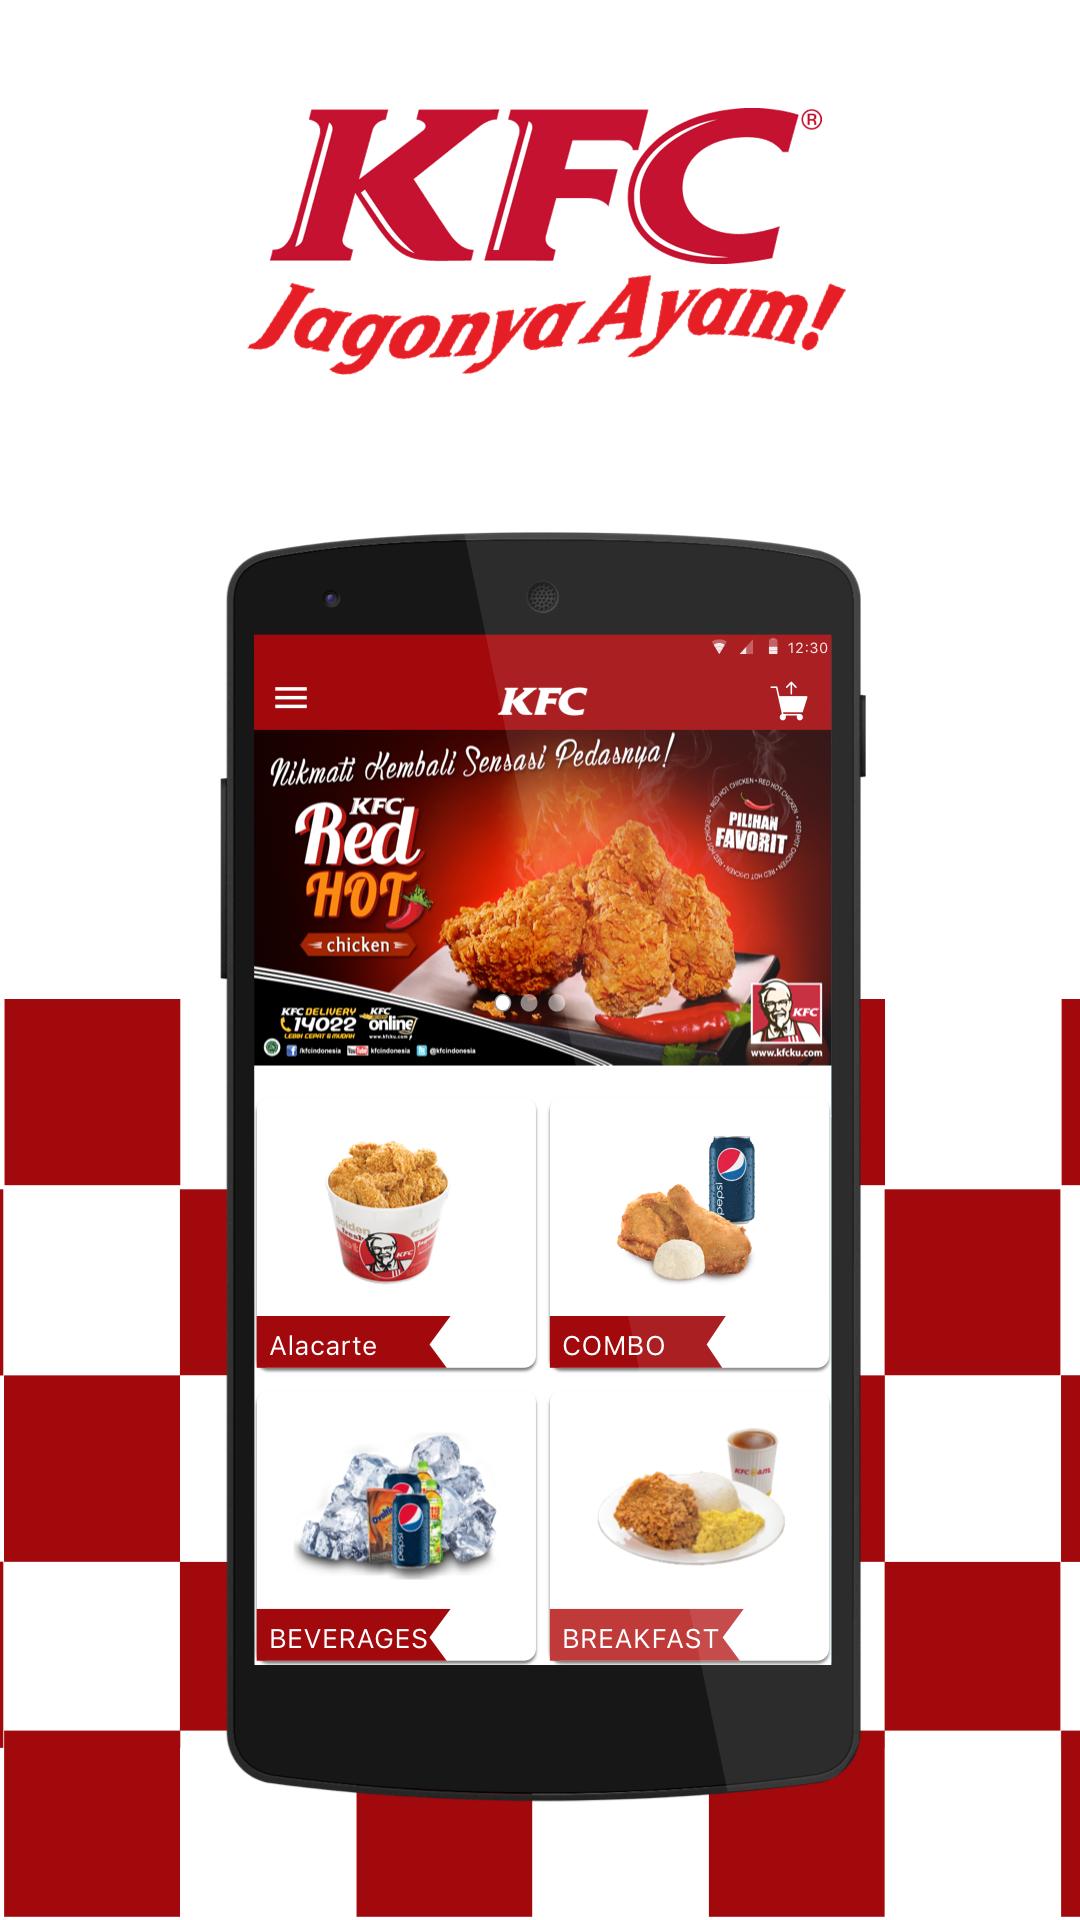 Kfc For Android Apk Download - kfc food menu roblox